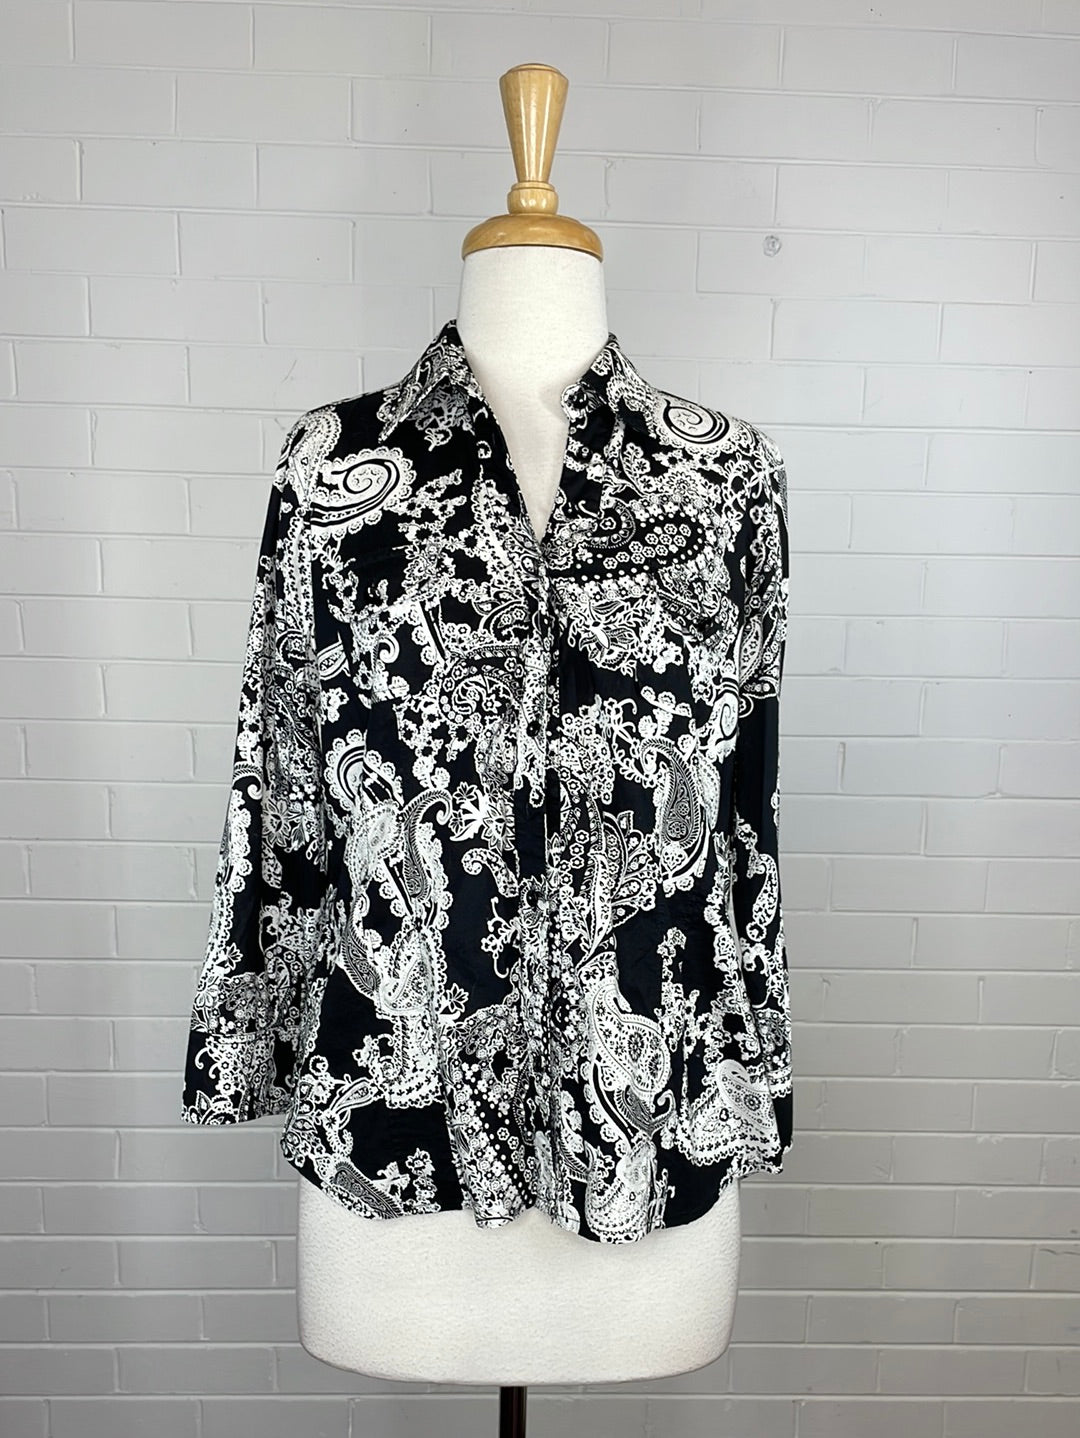 Kookai women's long sleeve black button front shirt blouse career